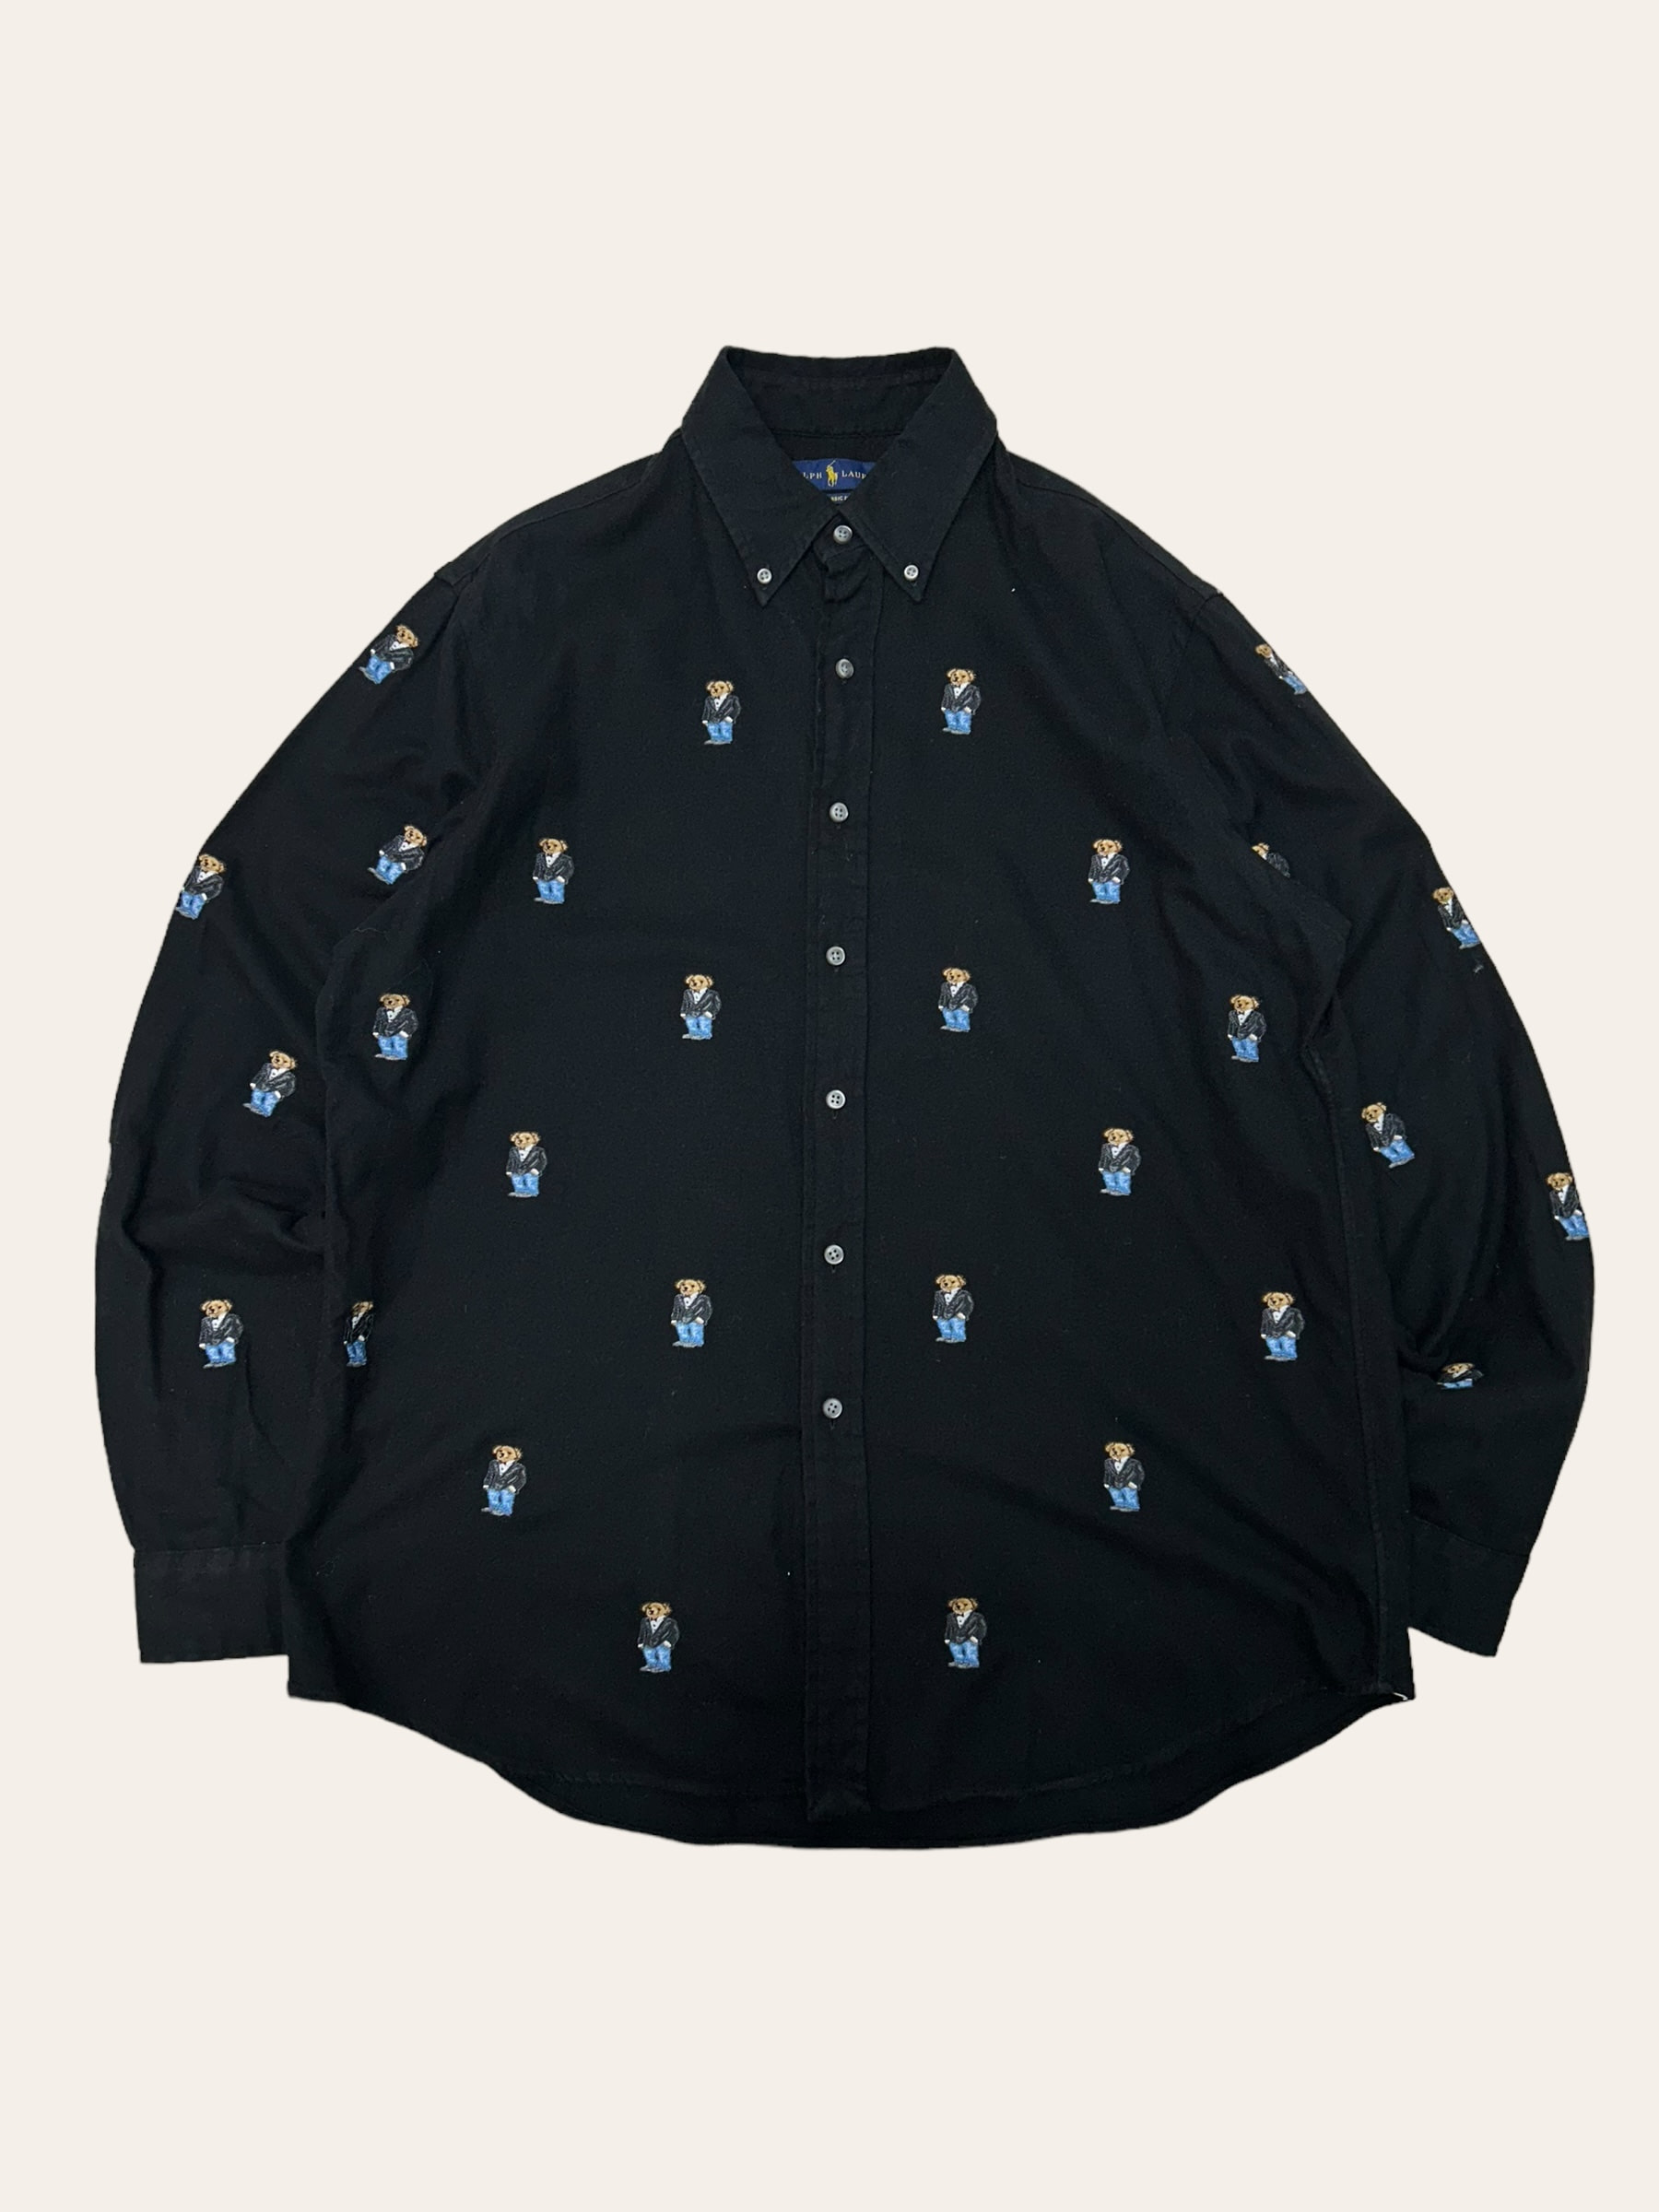 Polo ralph lauren black bear embroidered shirt L